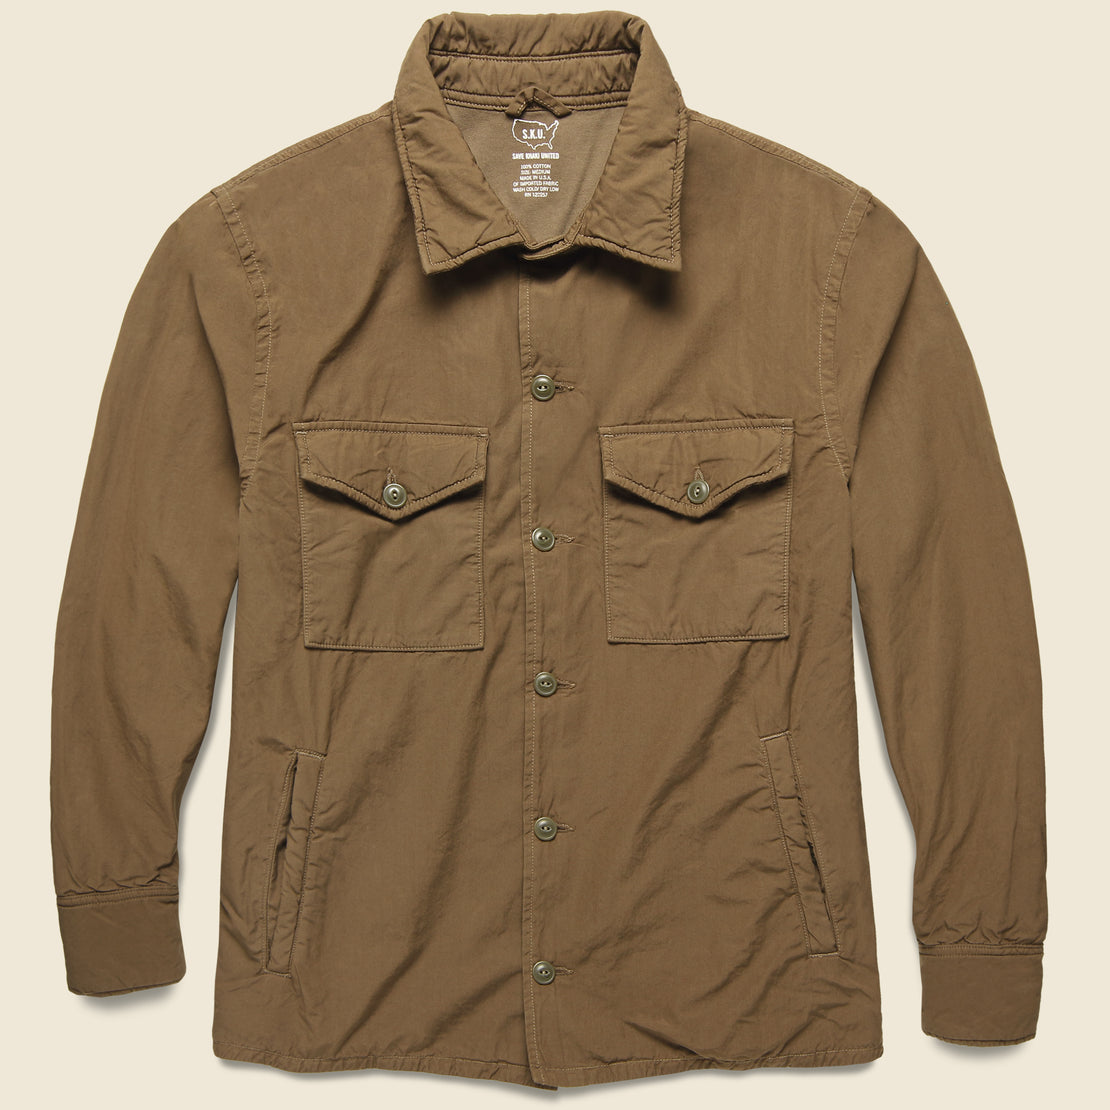 Save Khaki Fleece Lined Shirt Jacket - Barley